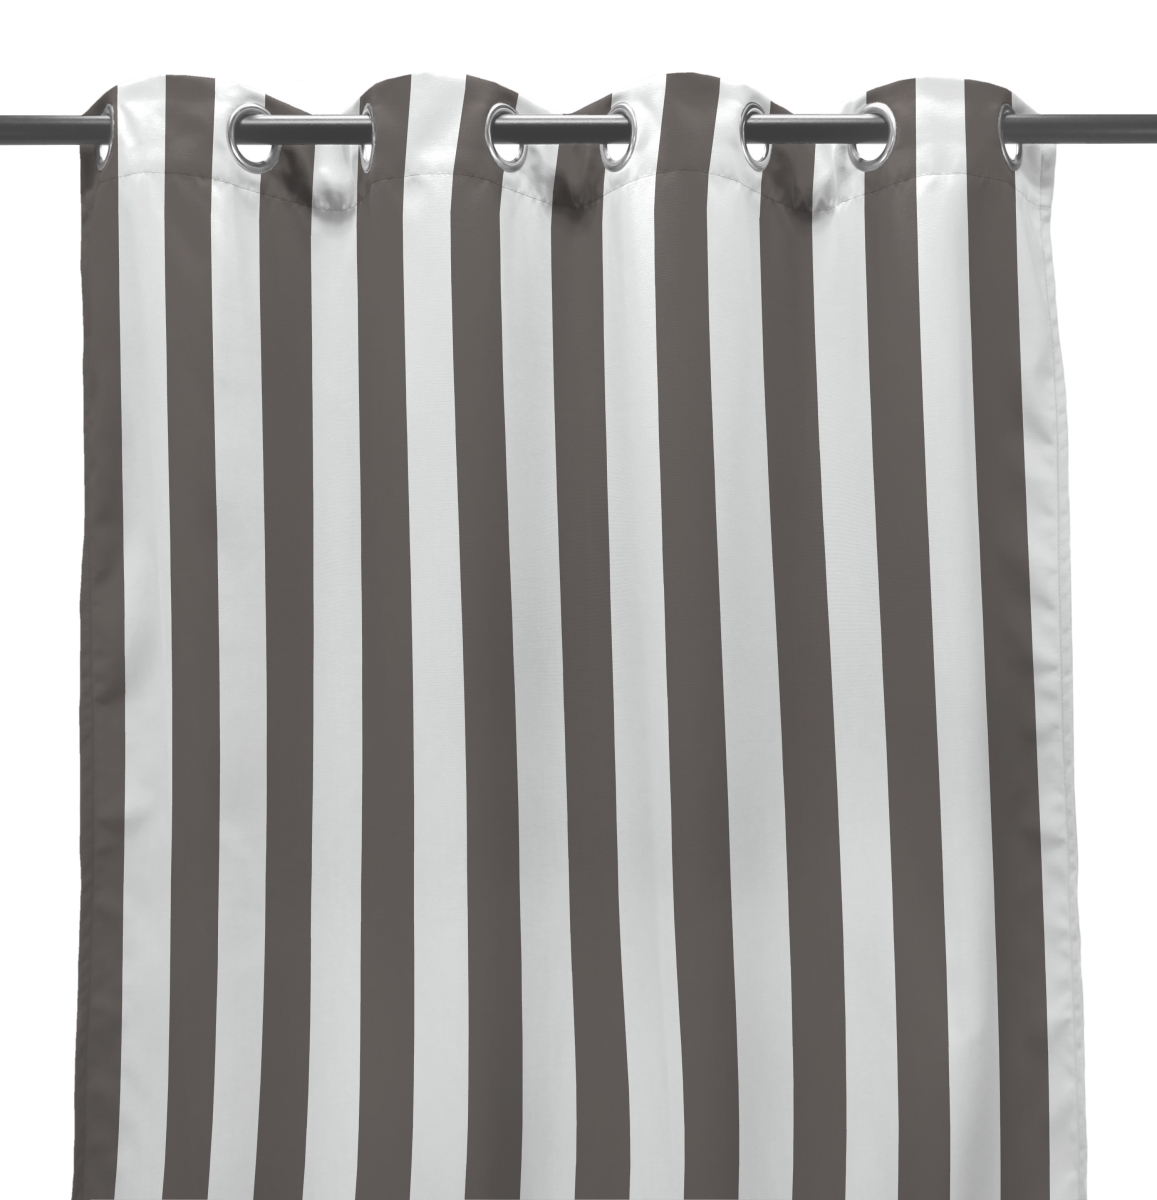 3voc5496-4336q 54 X 96 In. Outdoor Curtain Panel In Gray Stripe